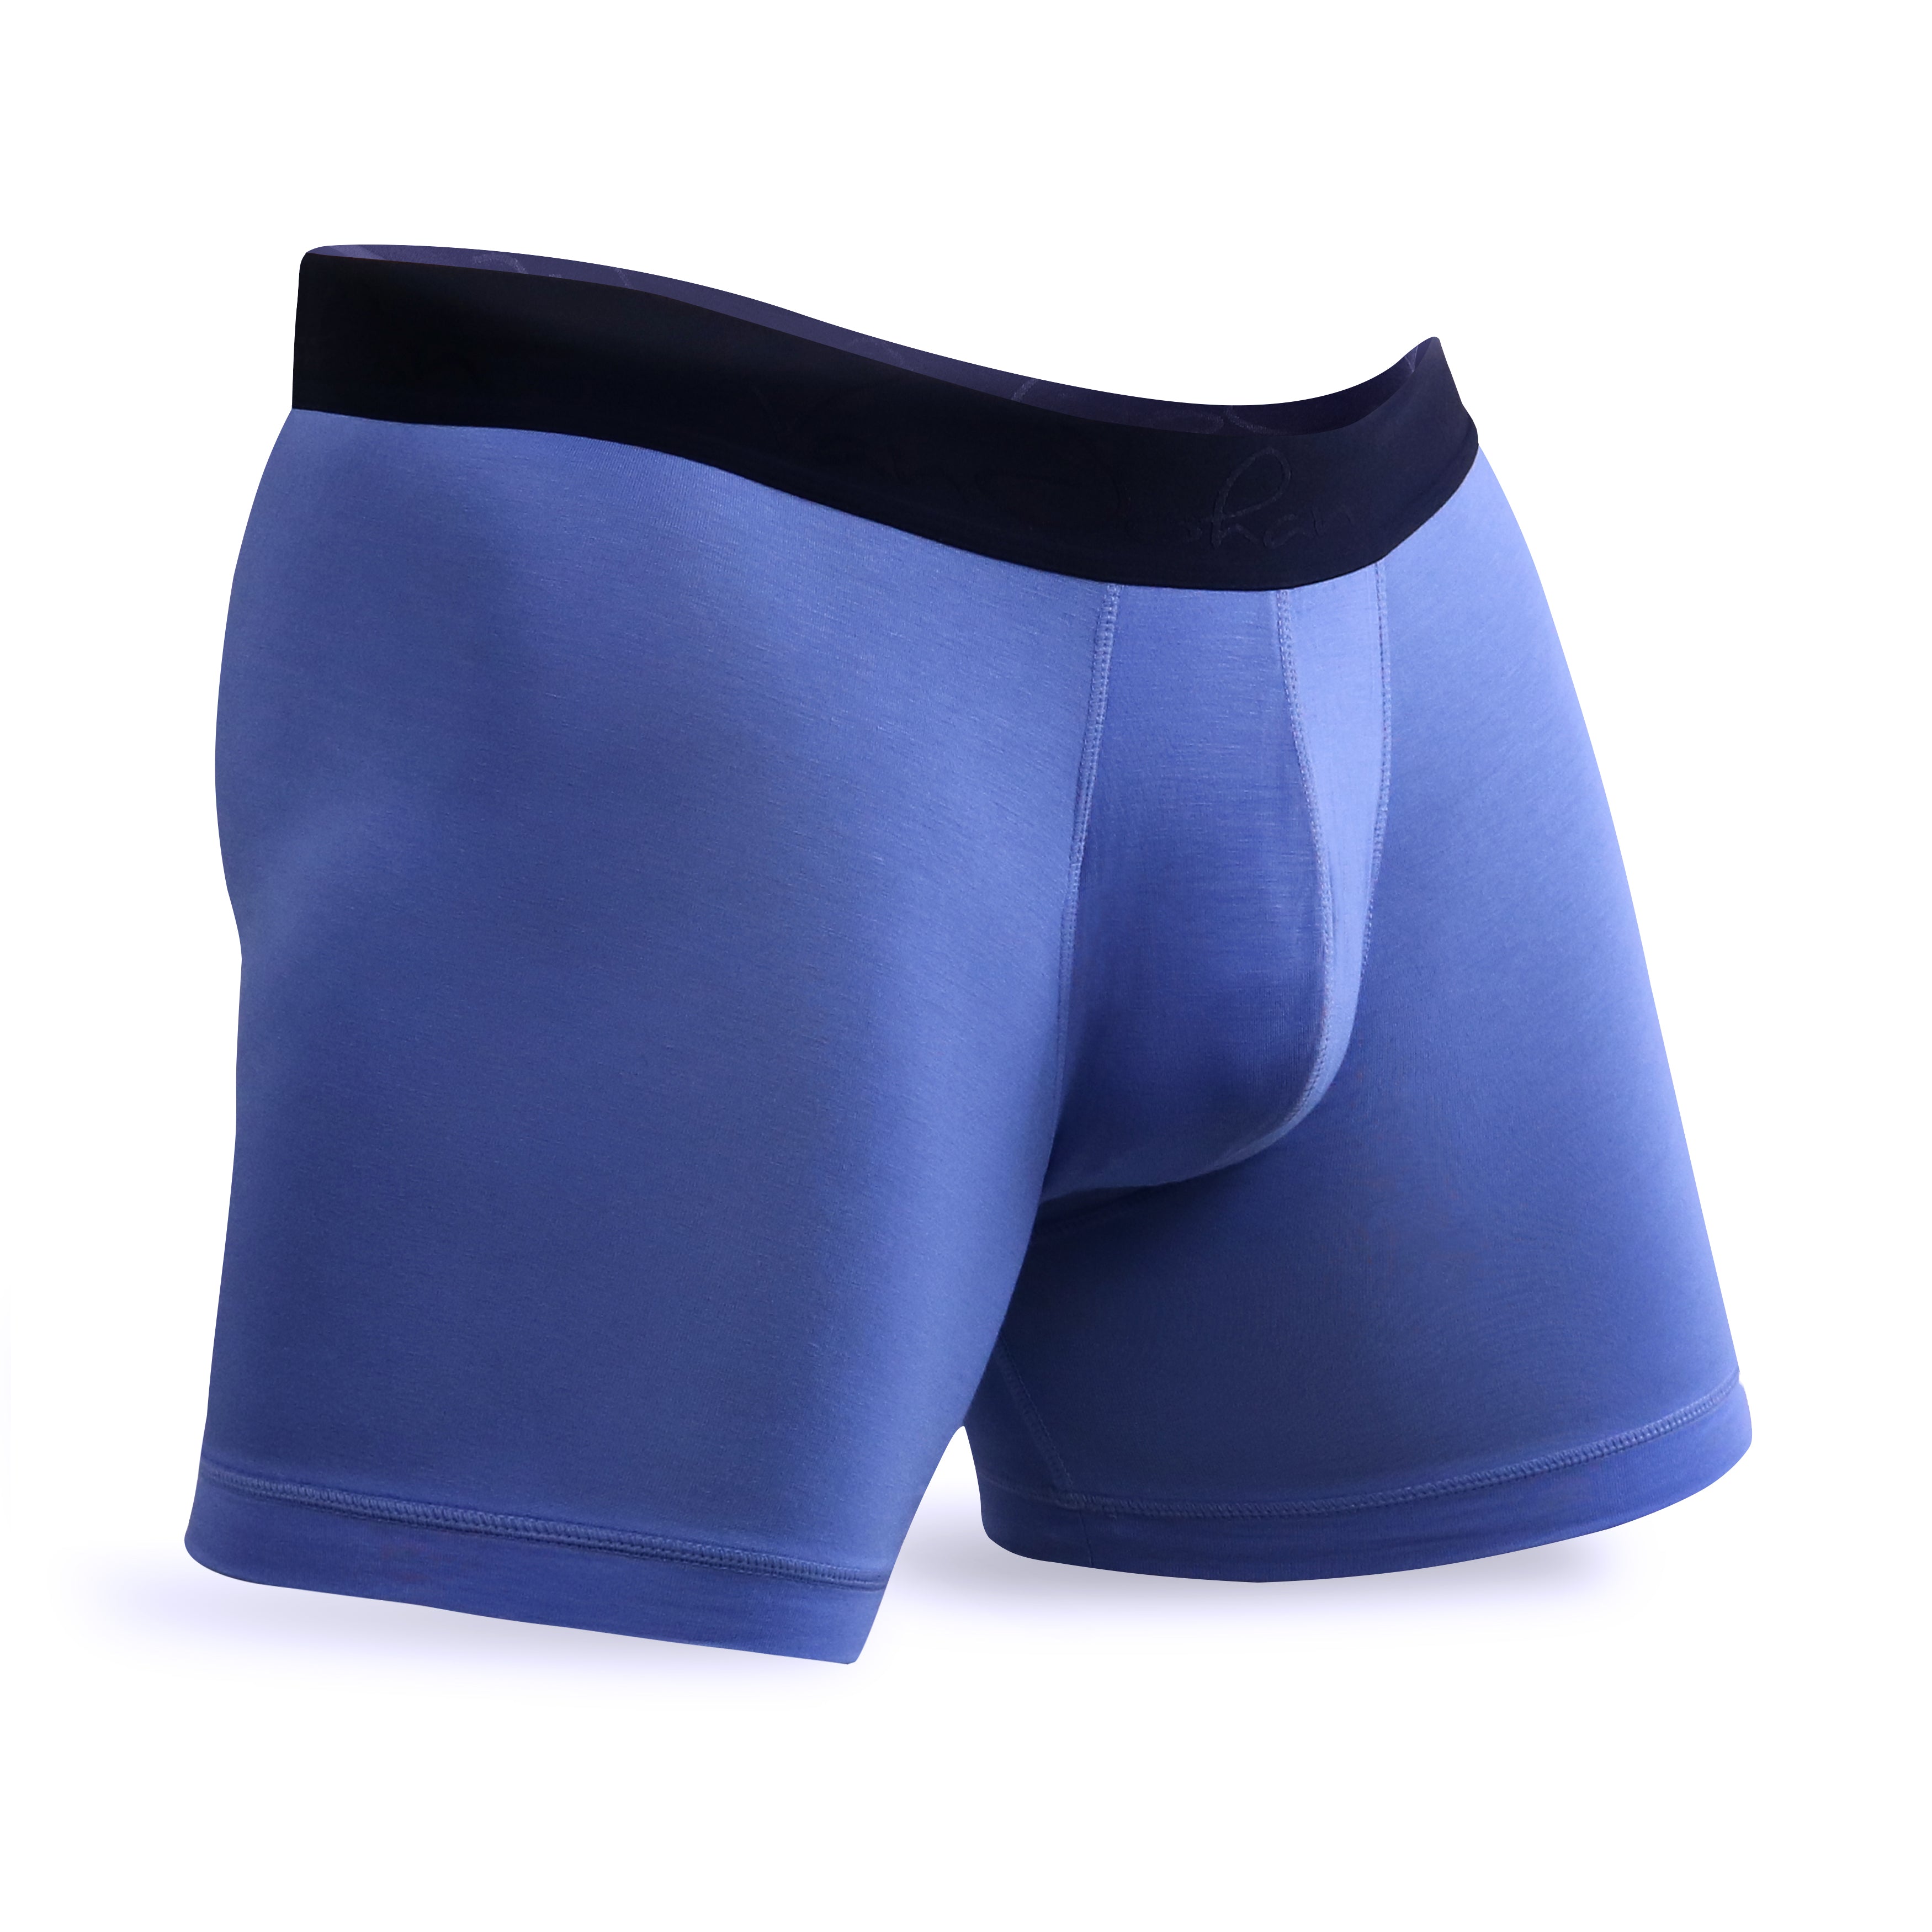 Buy 3 Get 1 Free Marina Blue  Best Mens Underwear for Ball